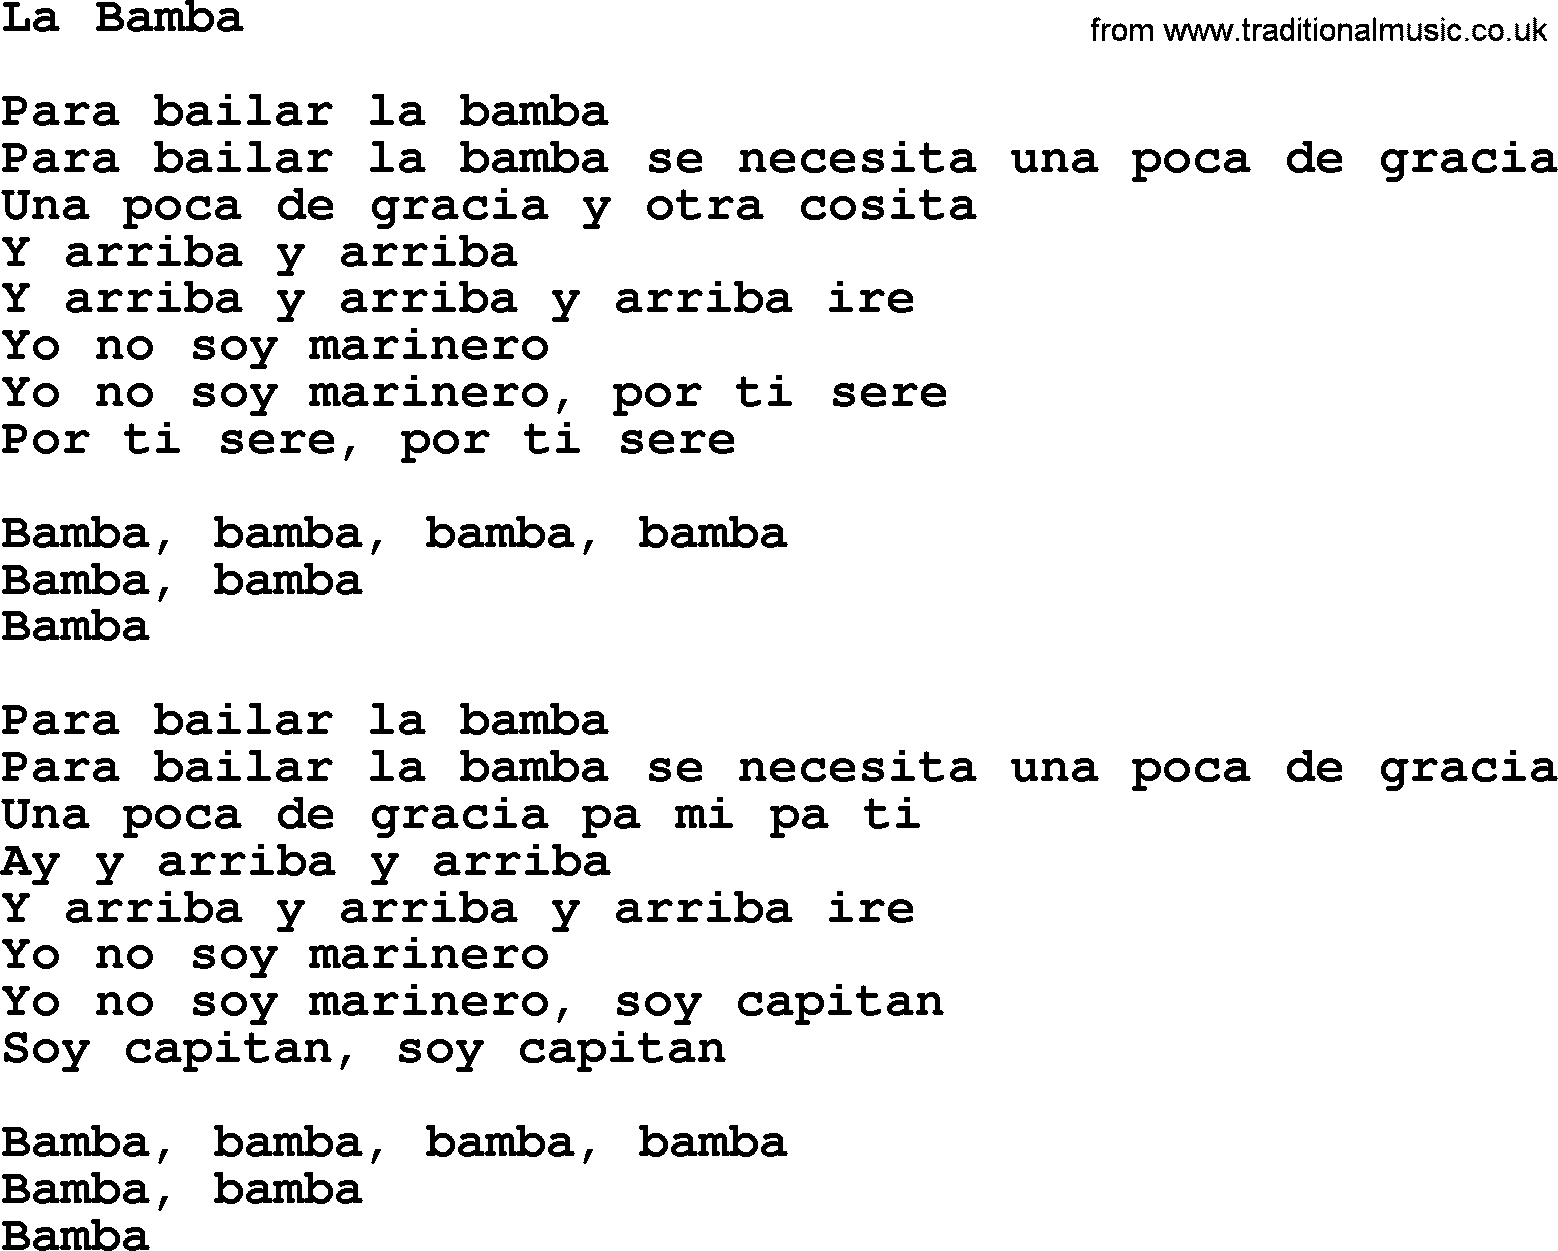 Joan Baez song La Bamba, lyrics